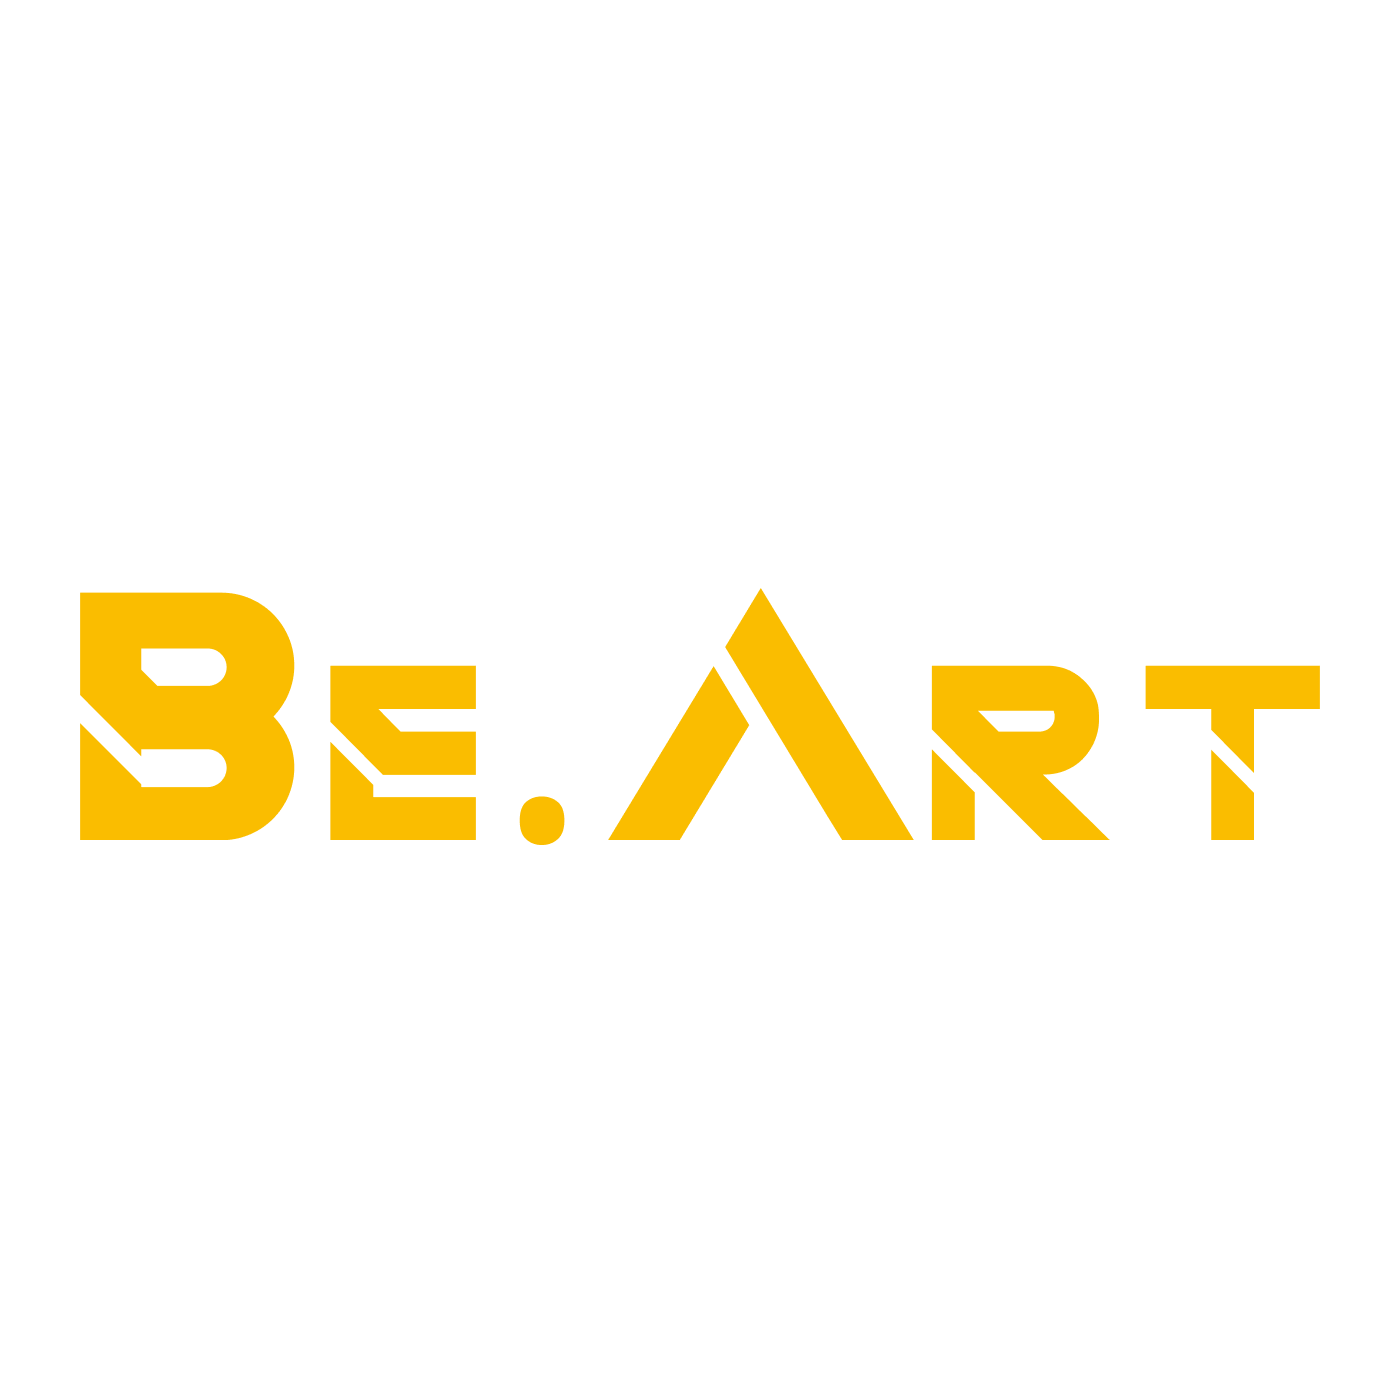 Be Art Logo.png